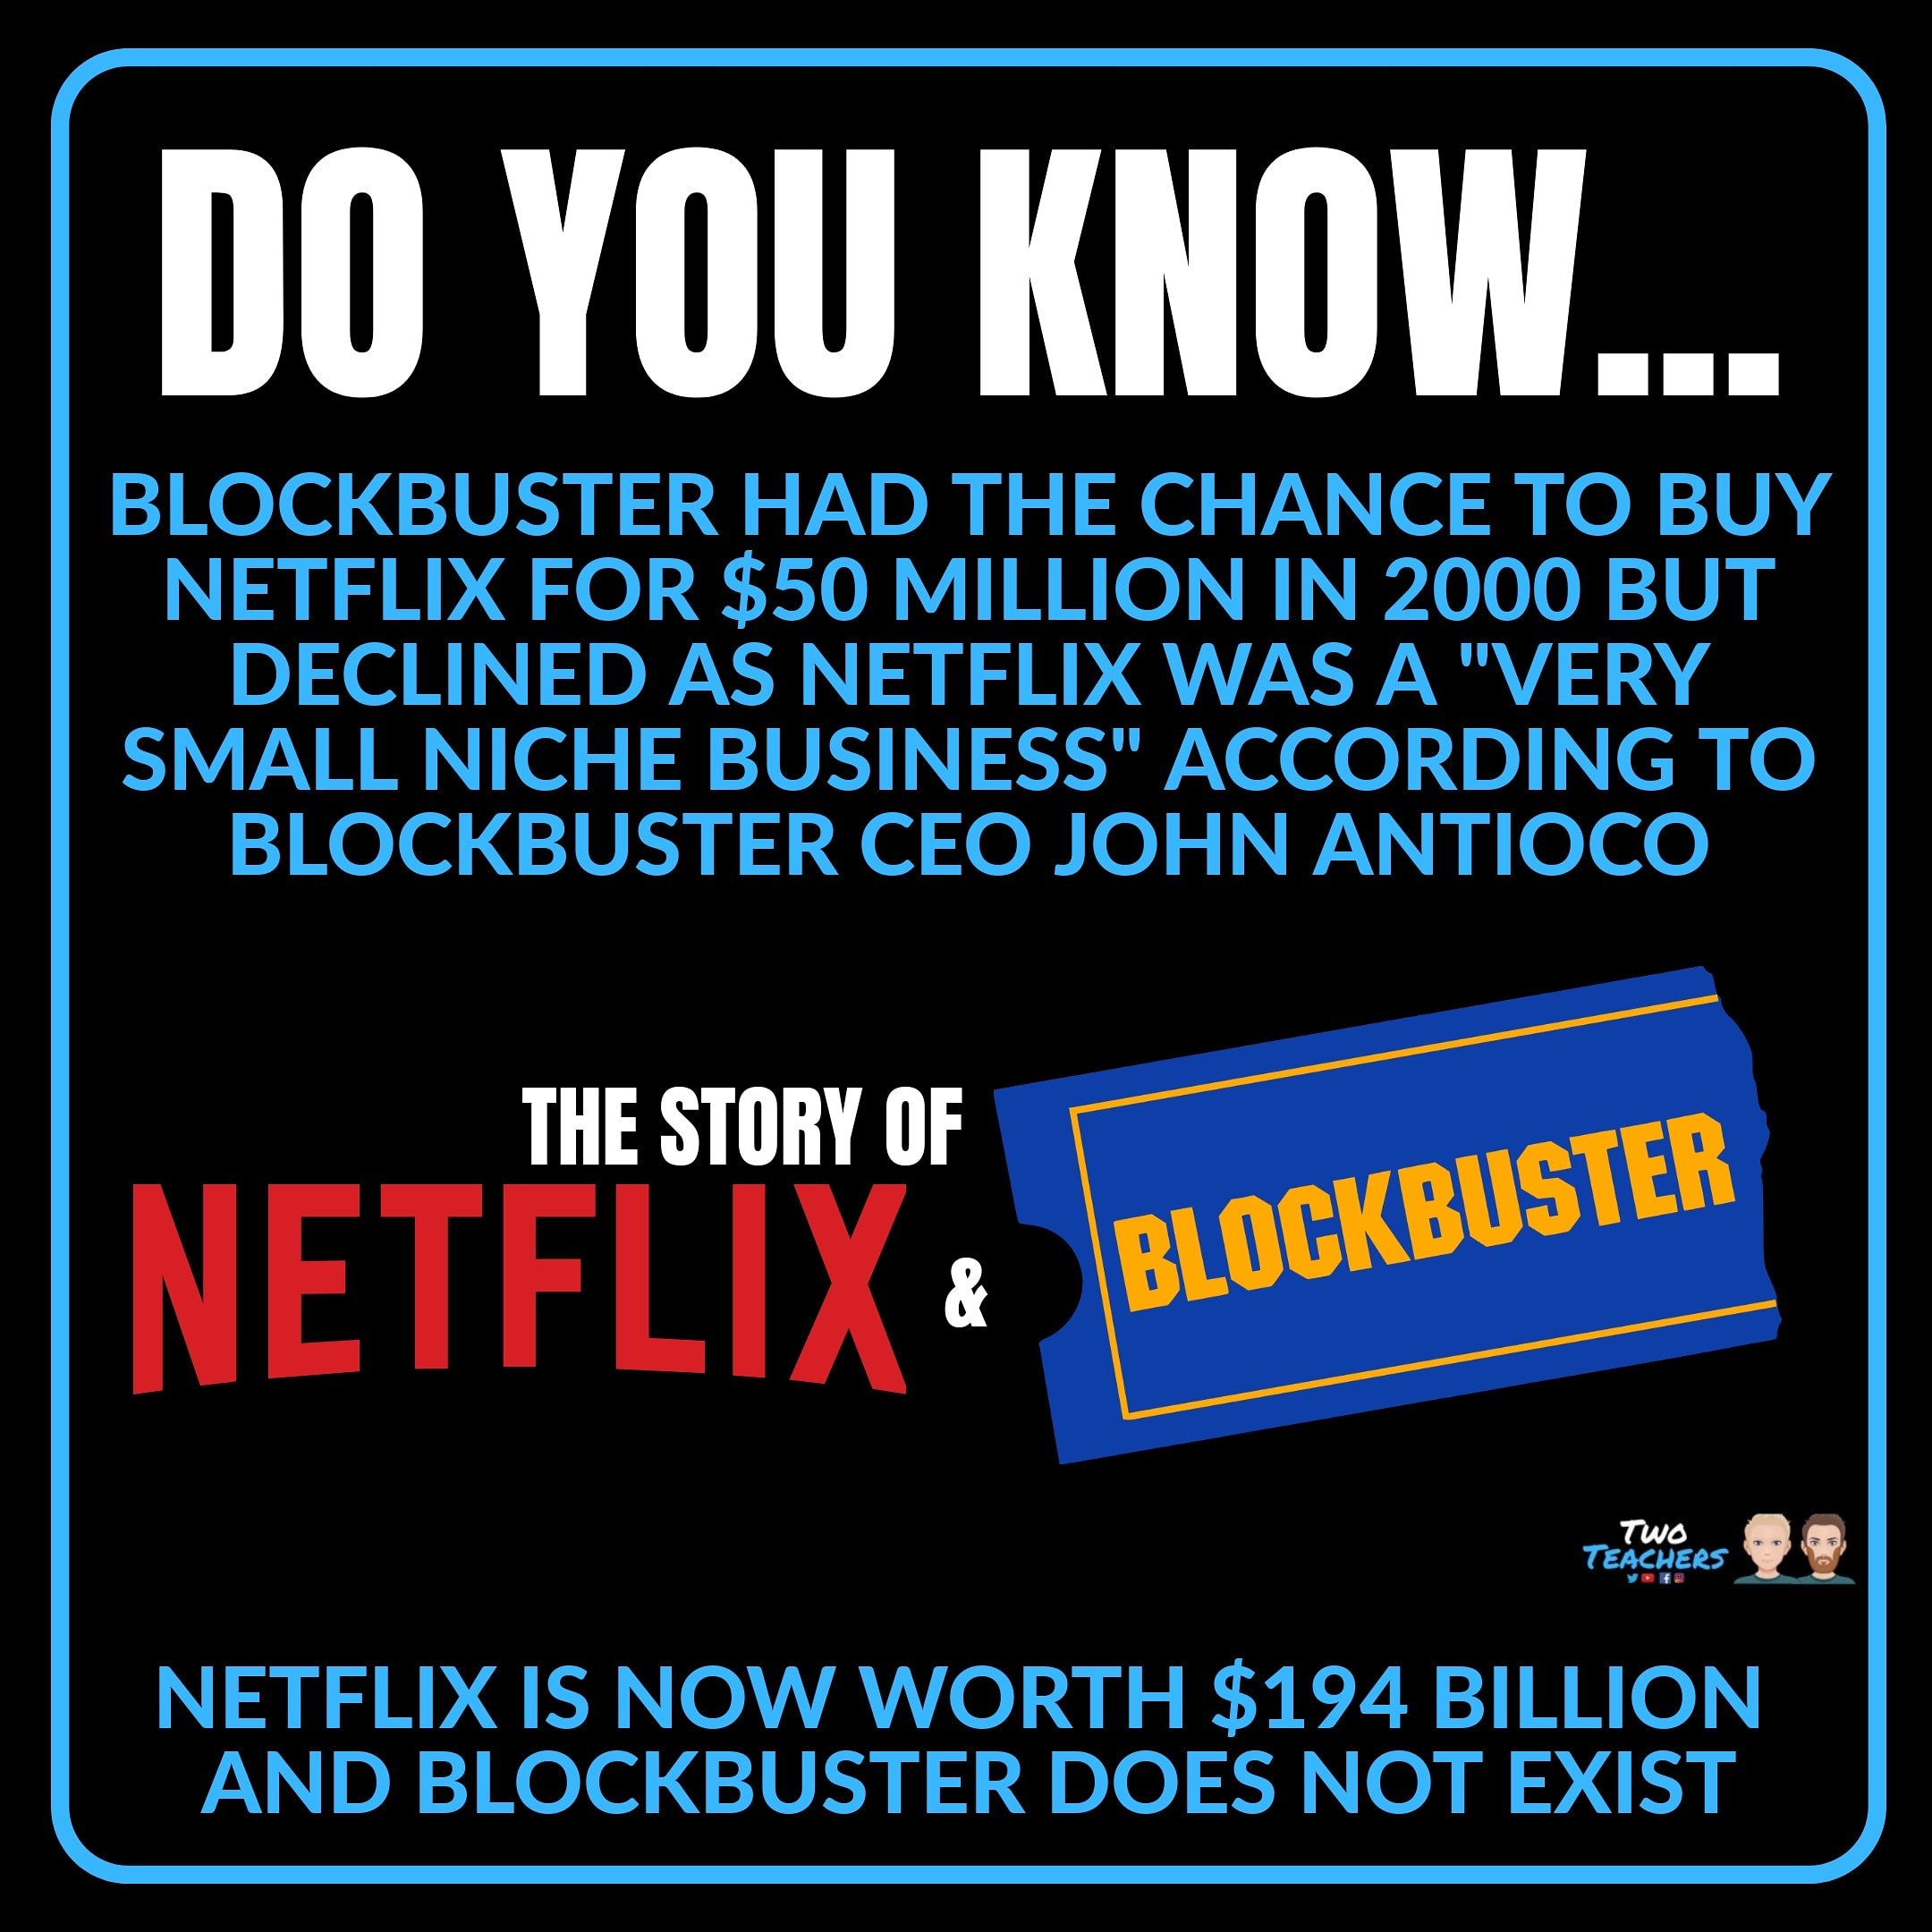 Blockbuster (Netflix